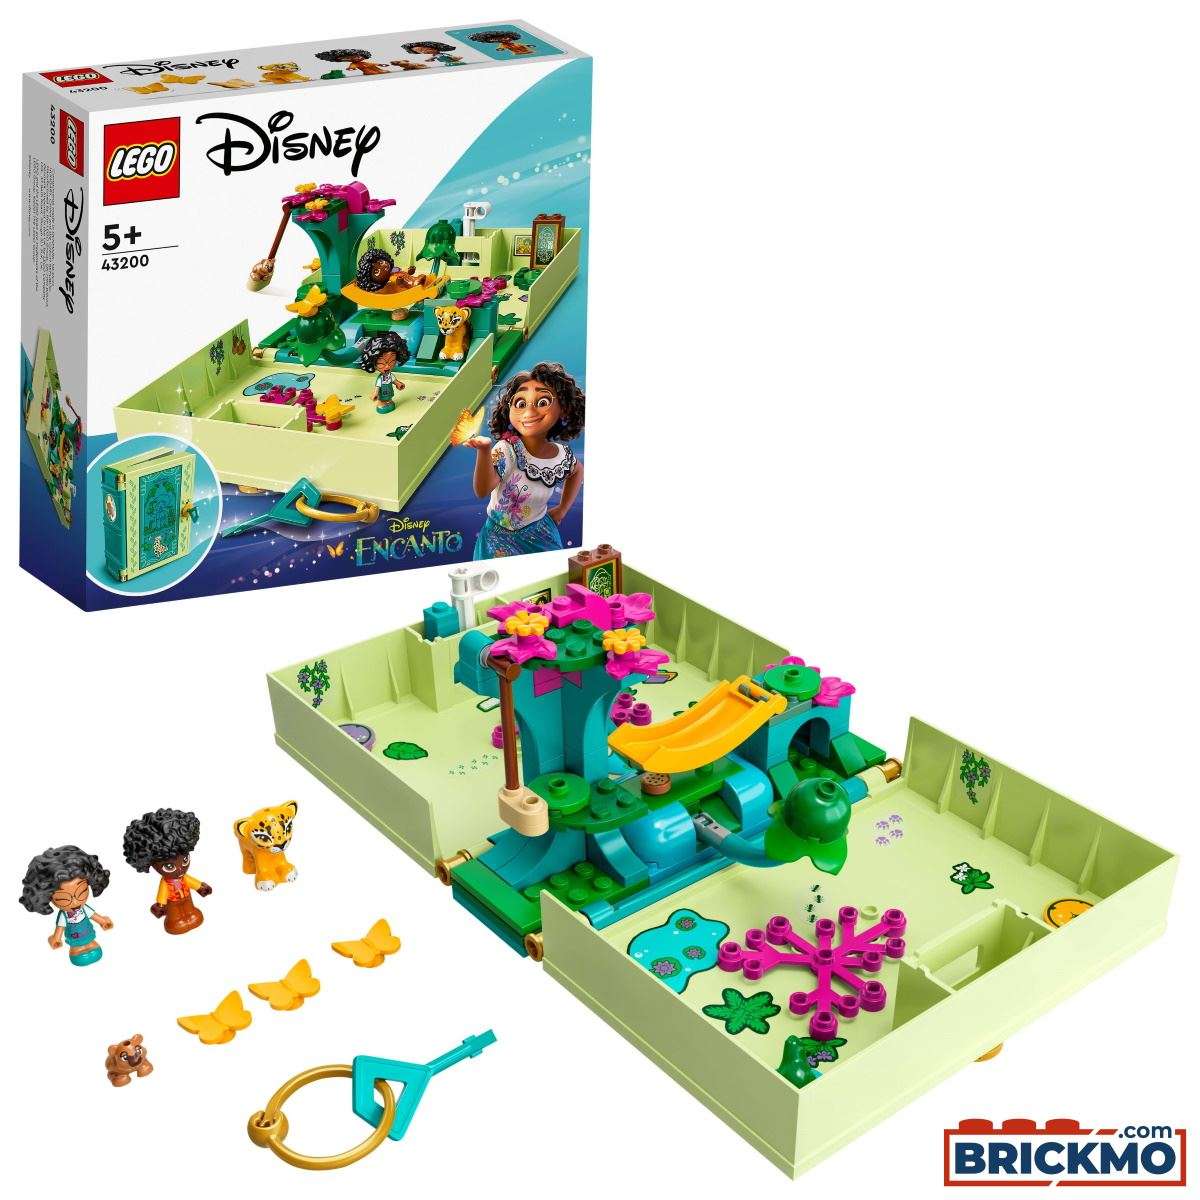 LEGO Disney 43200 Antonios magische Tür 43200